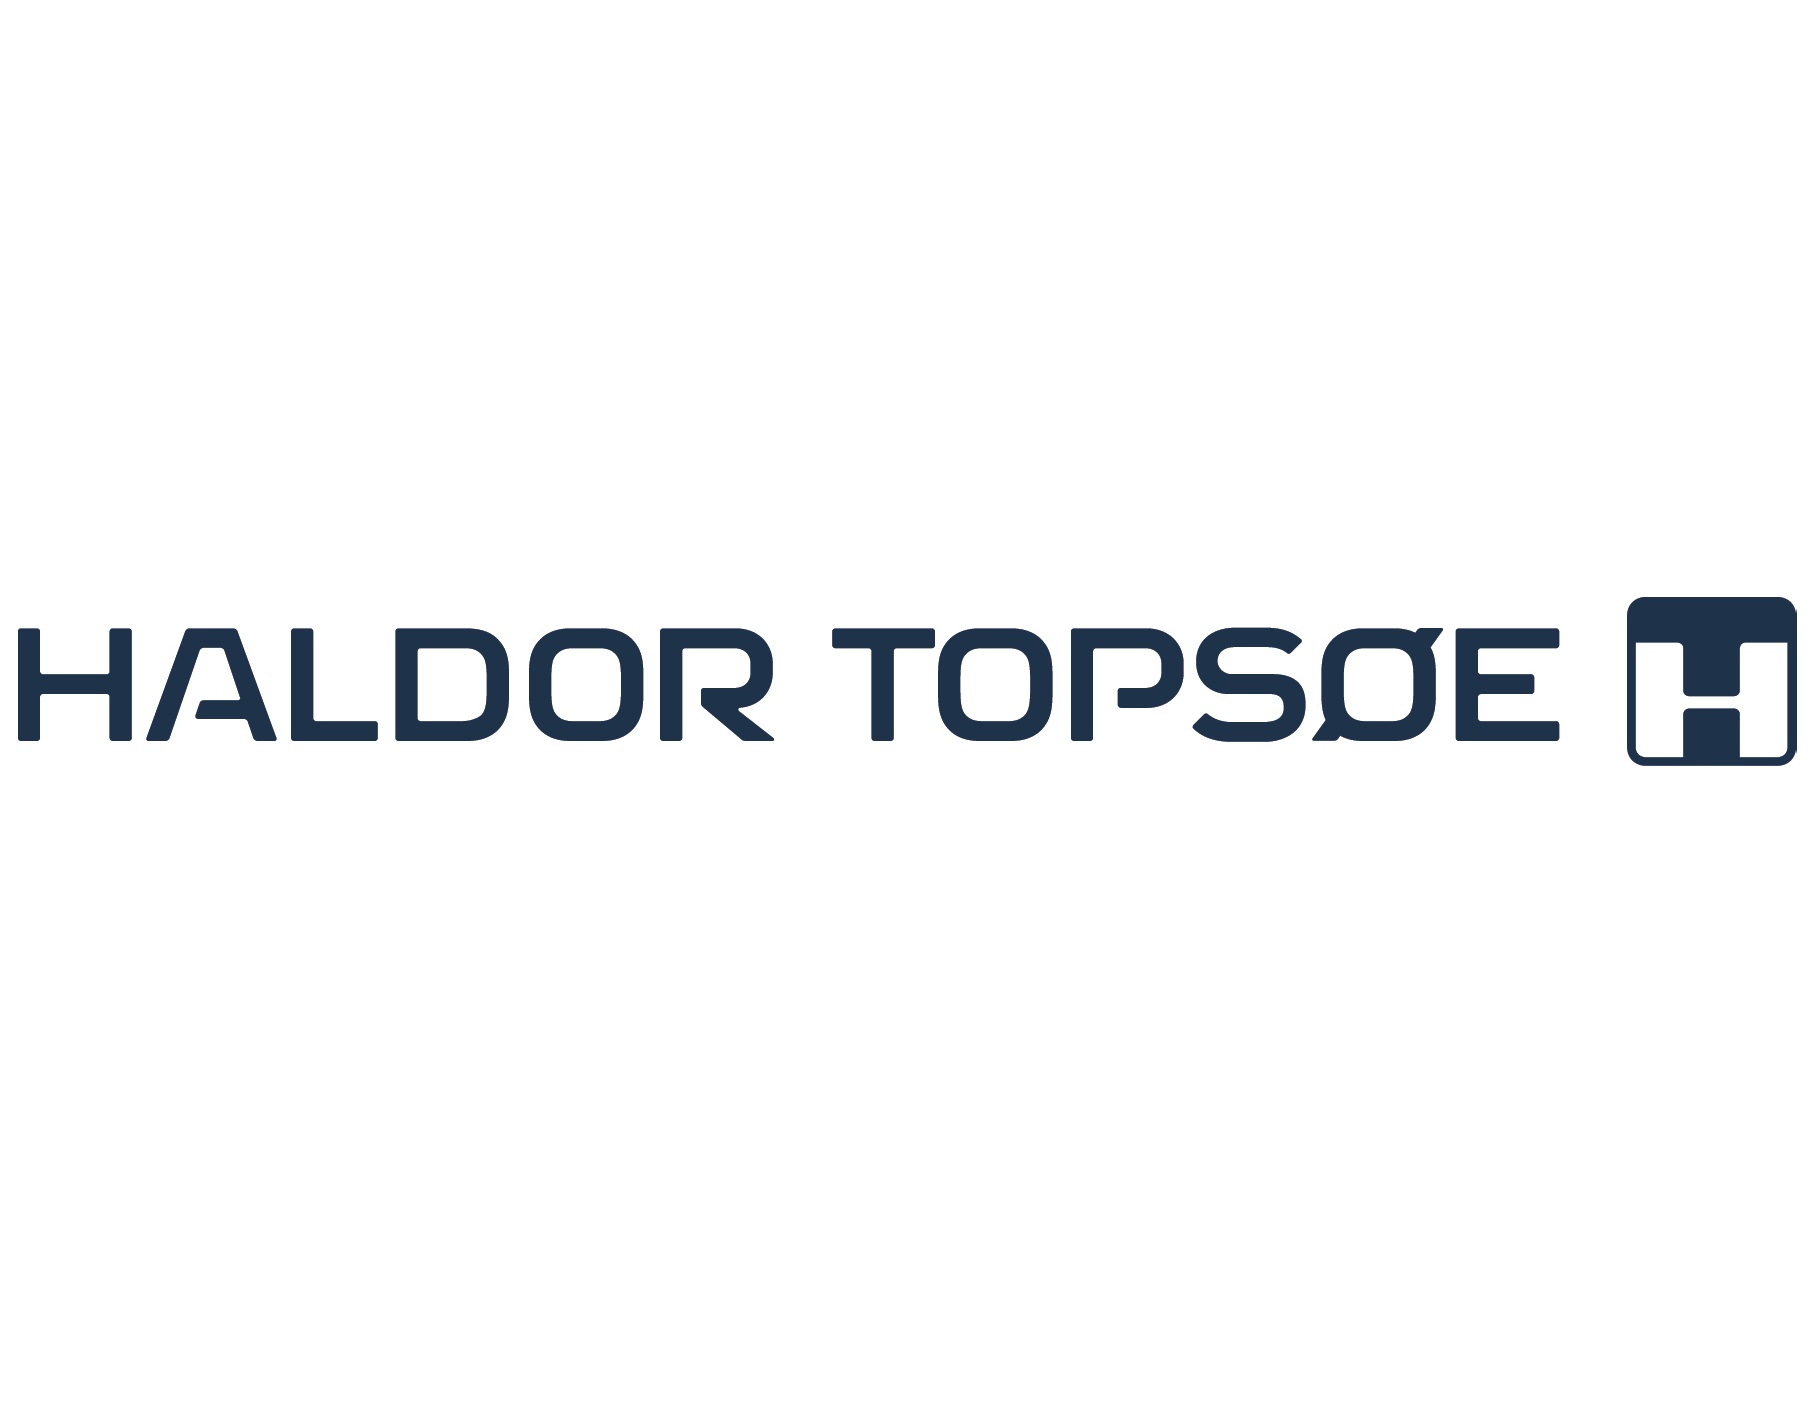 Haldor Topsoe A/S